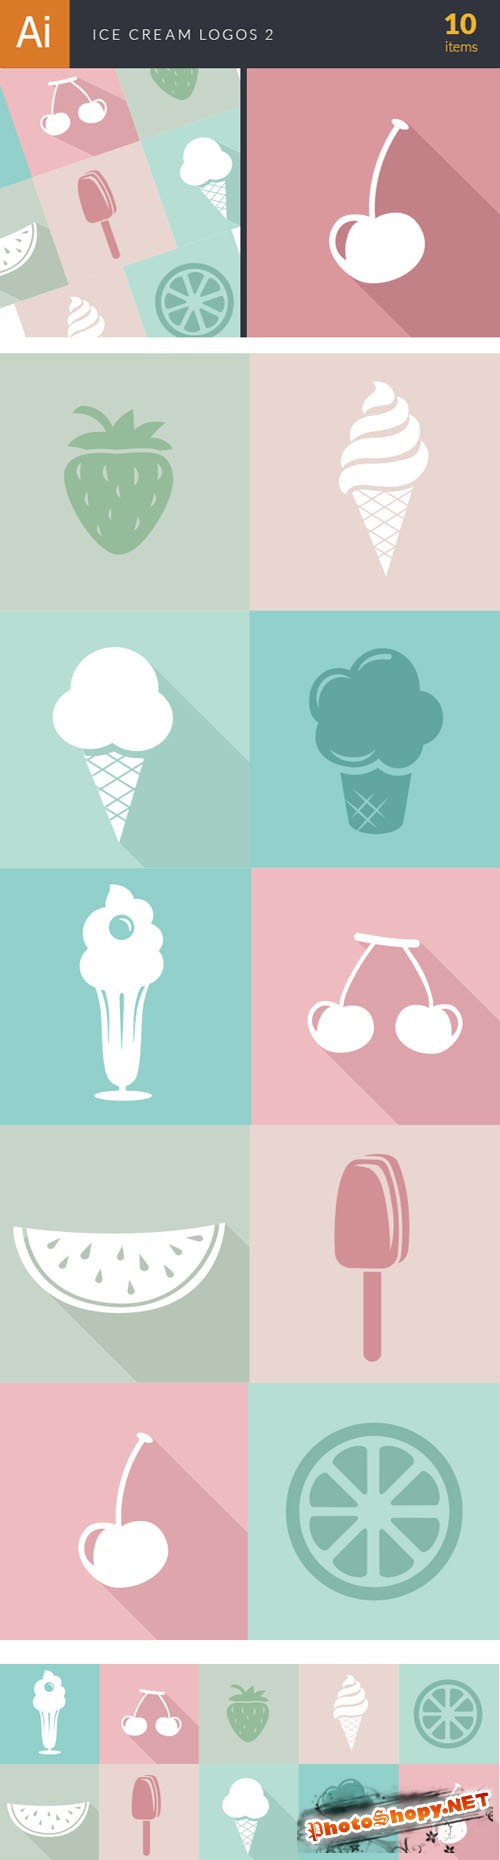 Ice Cream Logos Vector Elements Set 2